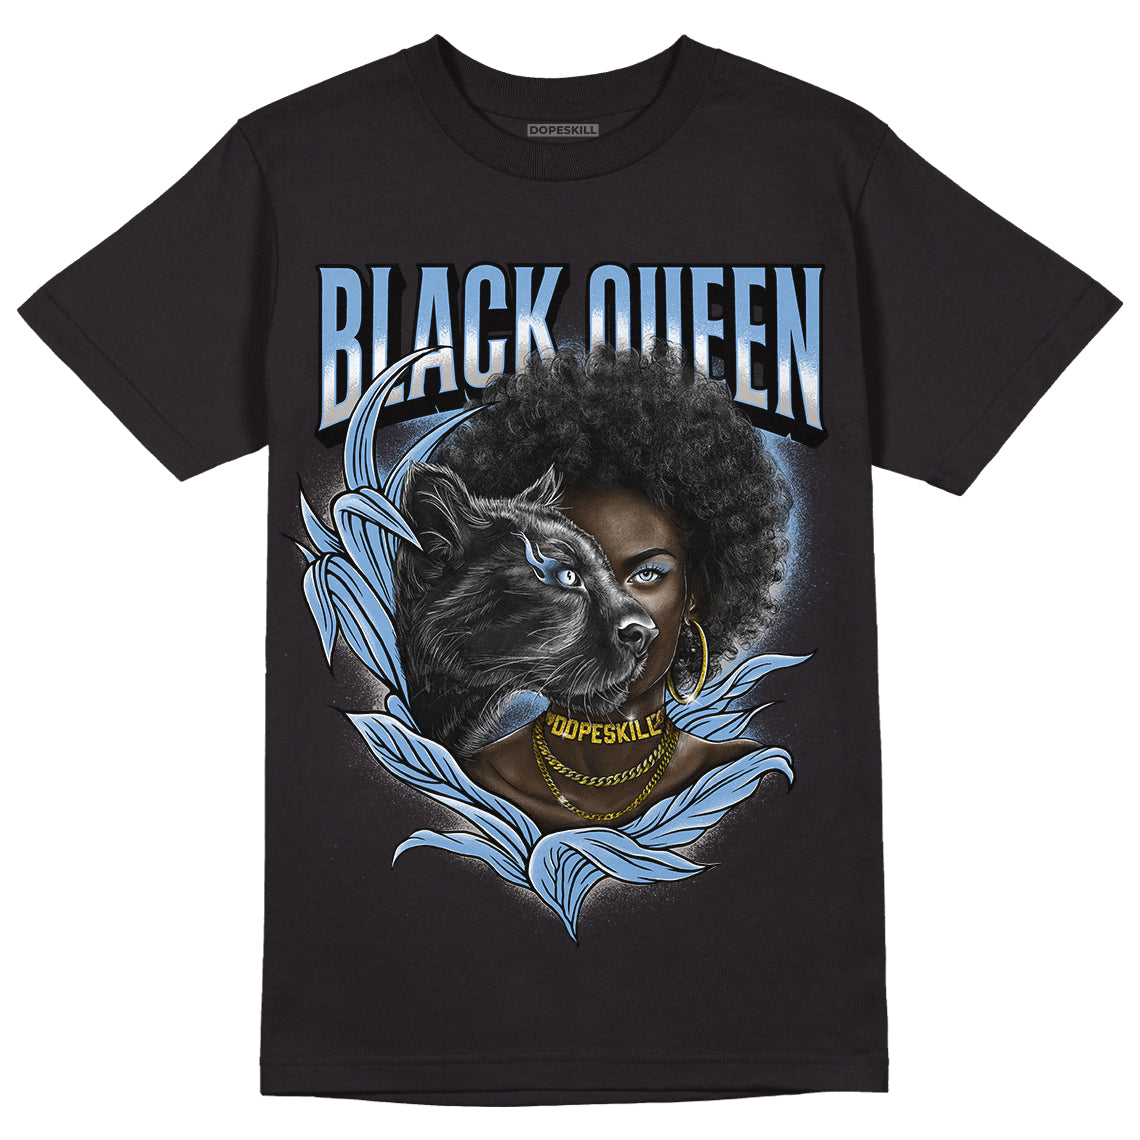 Jordan 5 Retro University Blue DopeSkill T-Shirt New Black Queen Graphic Streetwear - Black